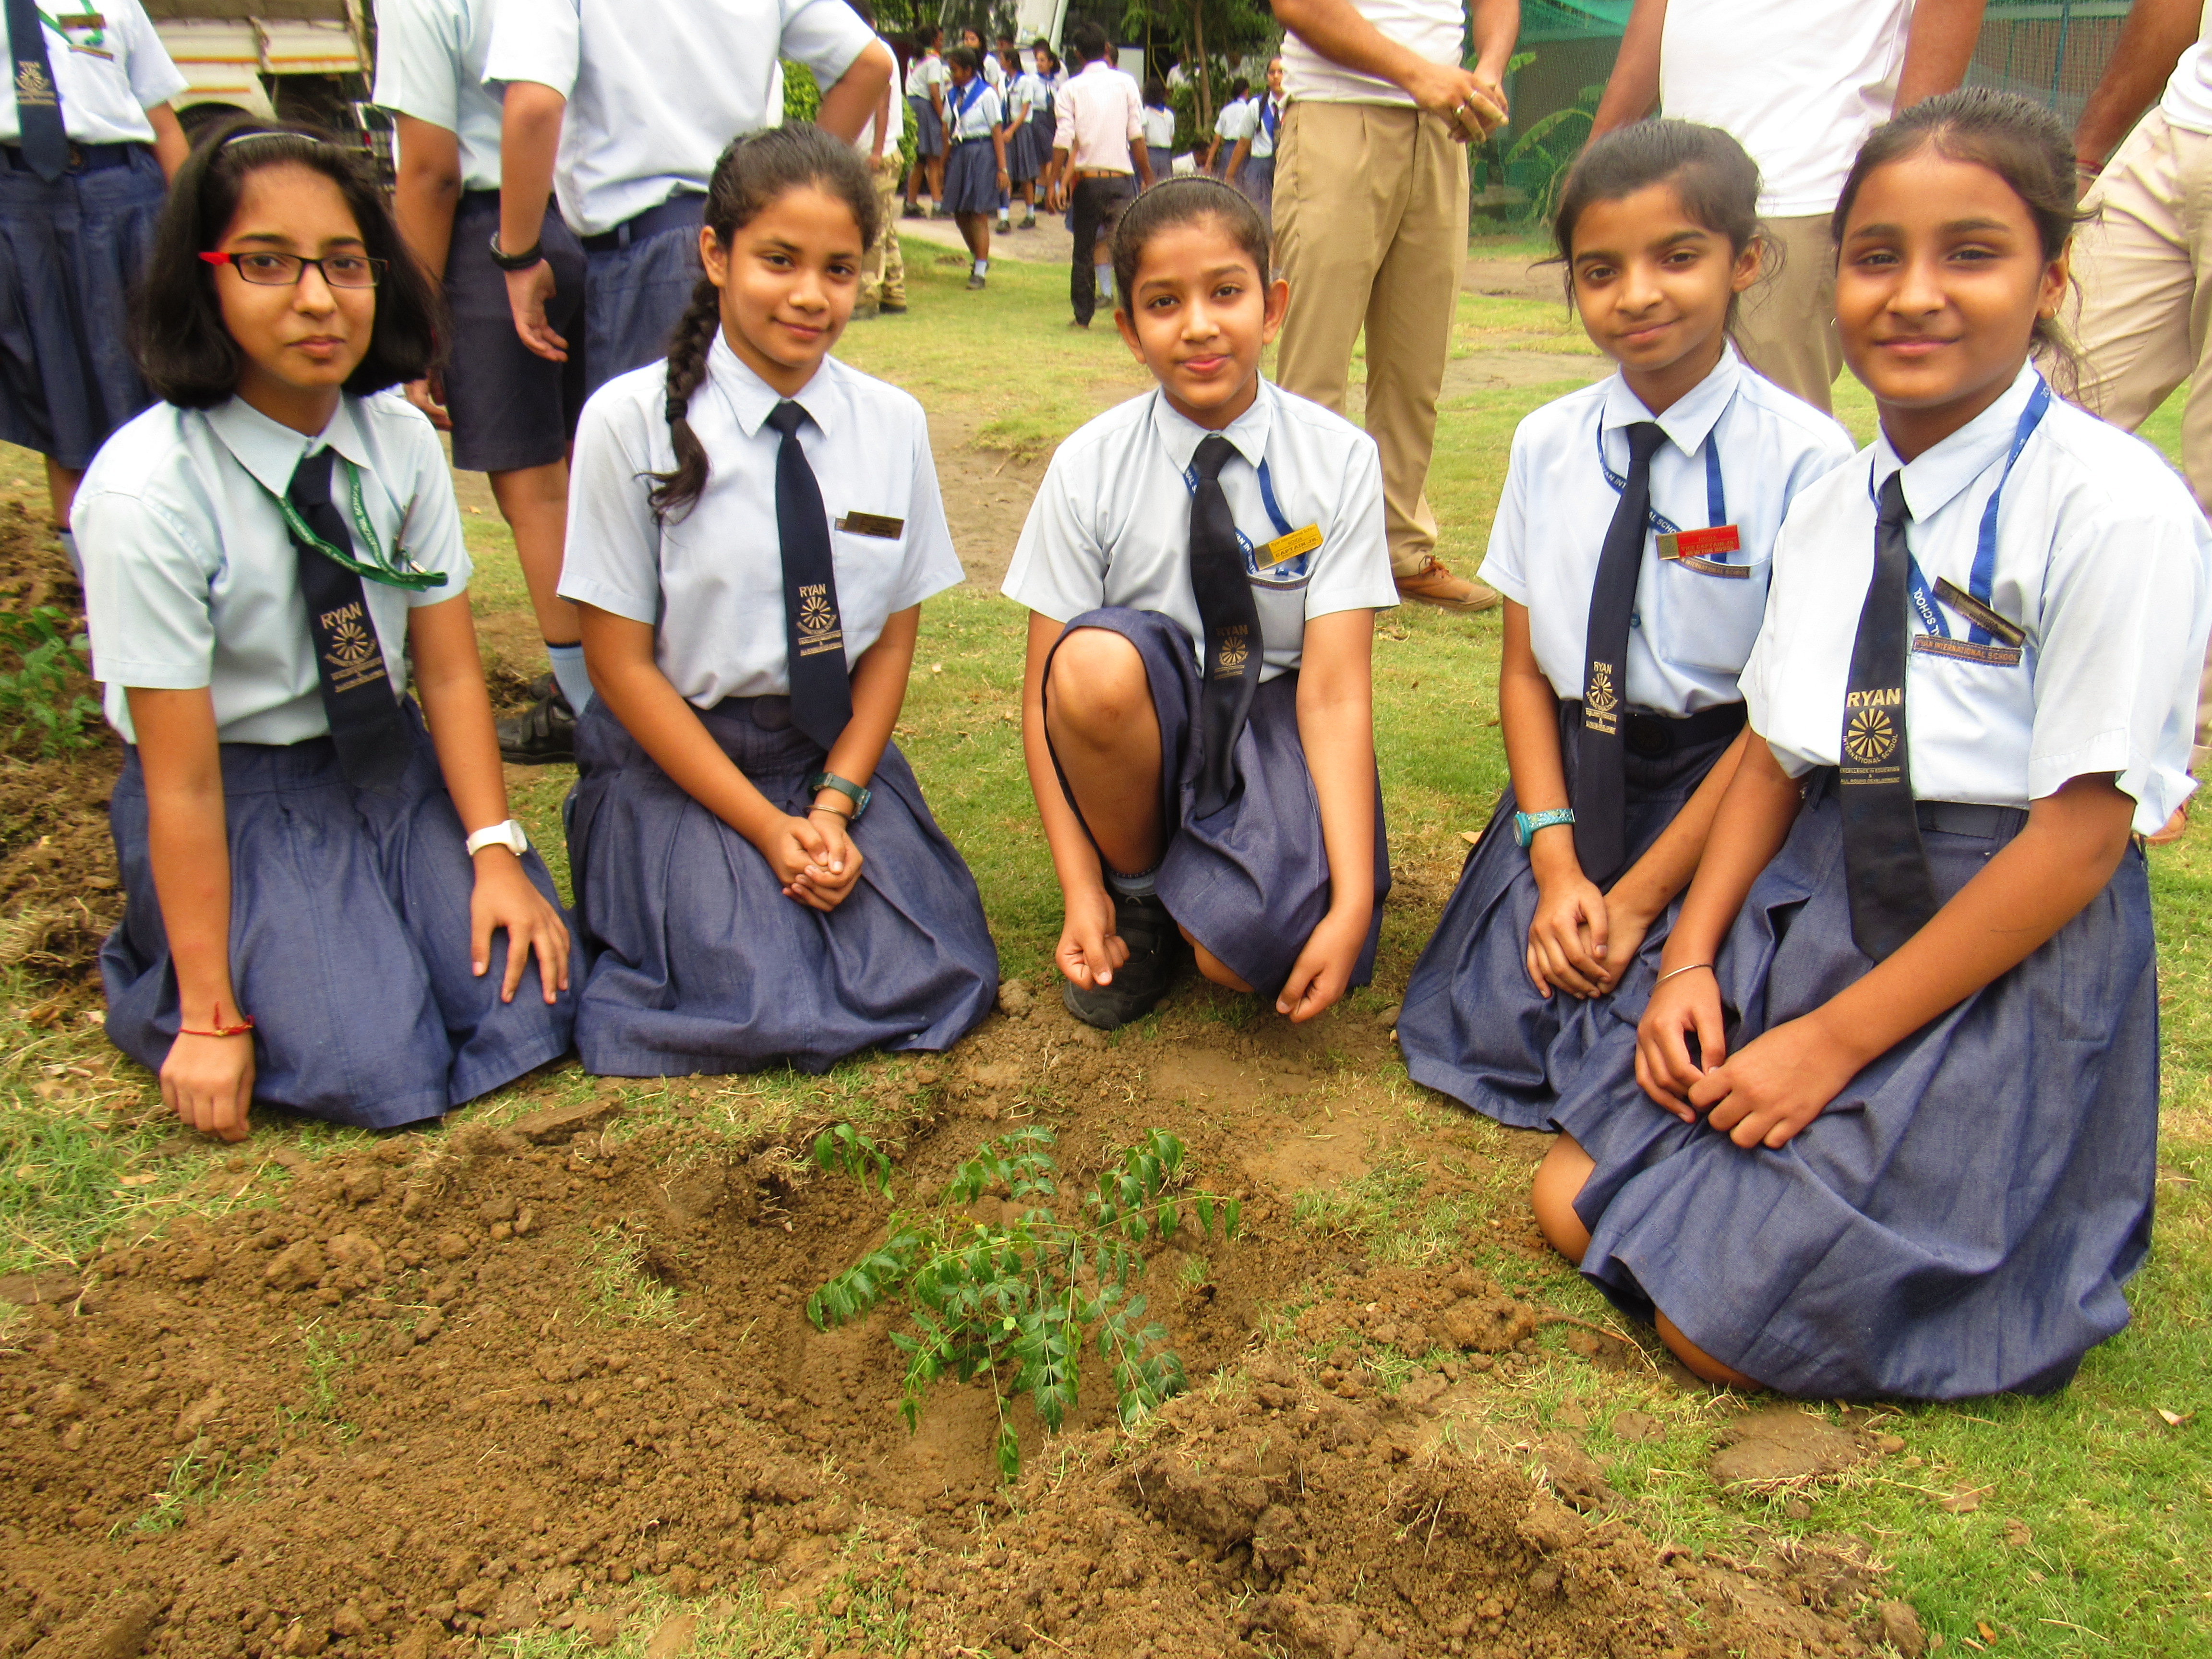 CISF personnels plant 200 saplings - Ryan International School, Sector 39